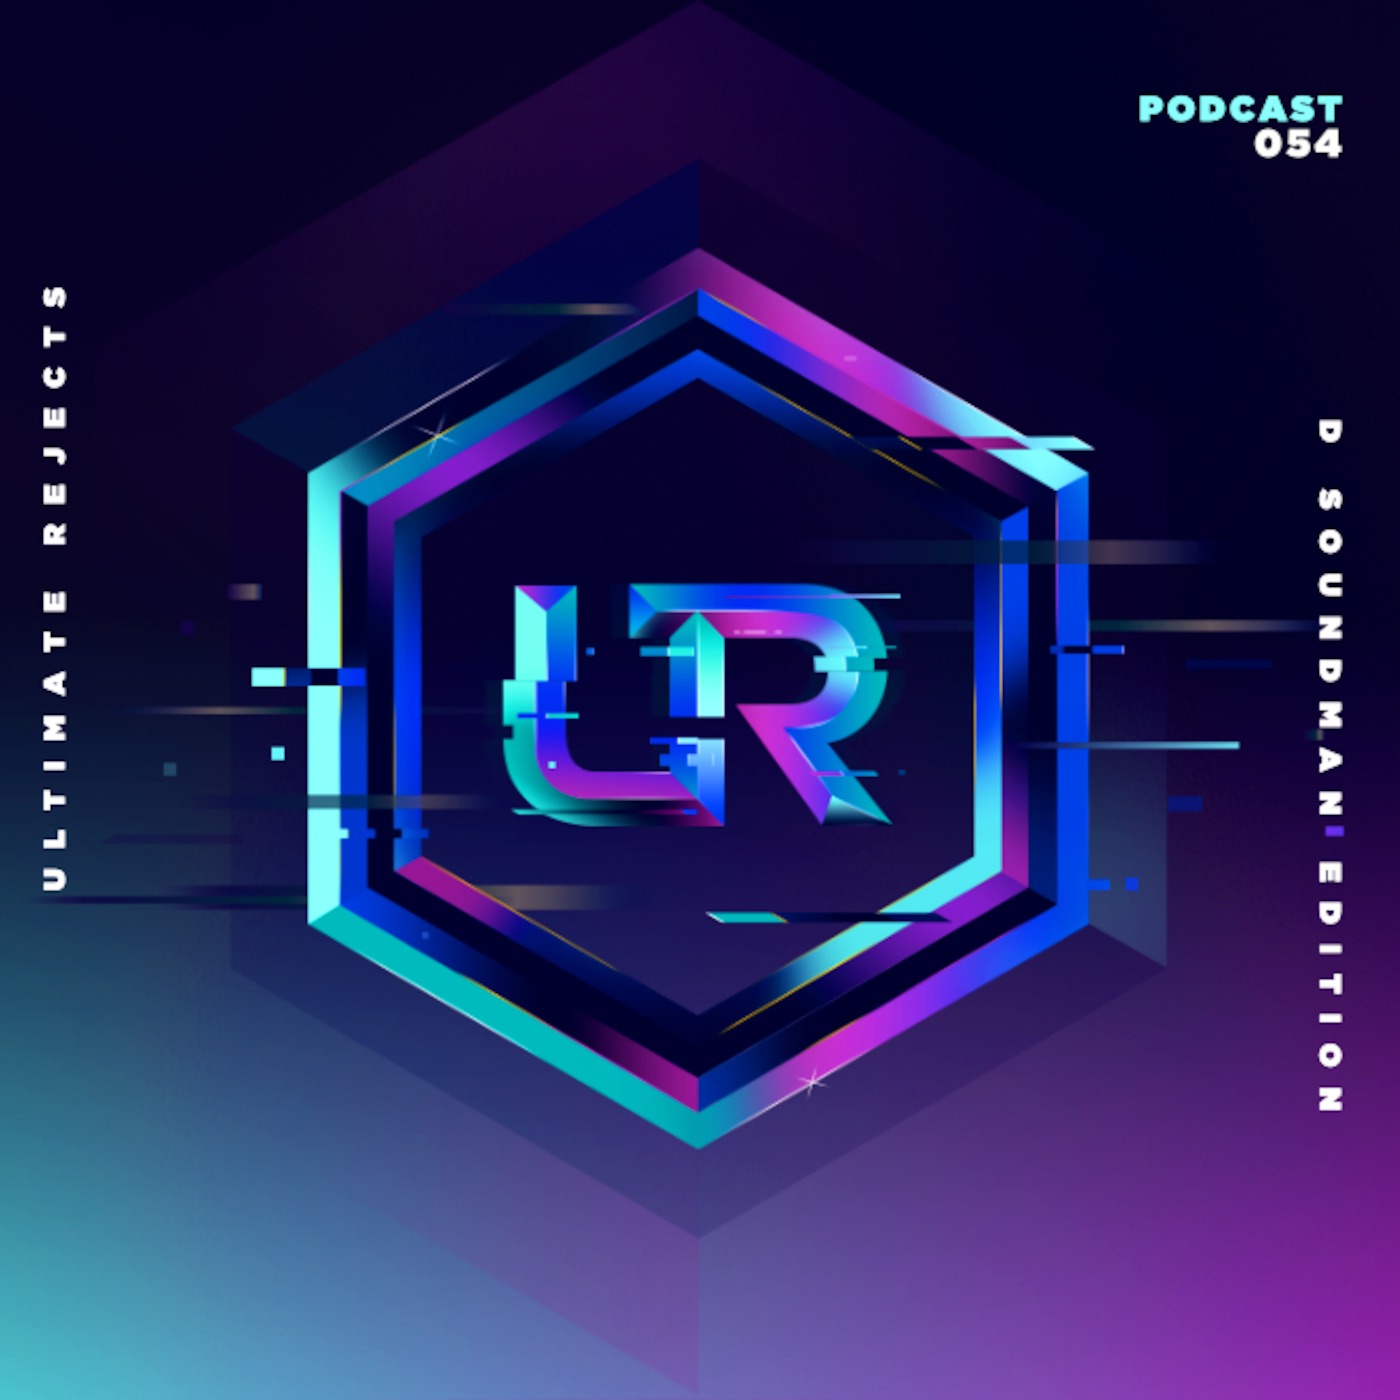 Ultimate Rejects UR Podcast 054 (D Soundman Edition)